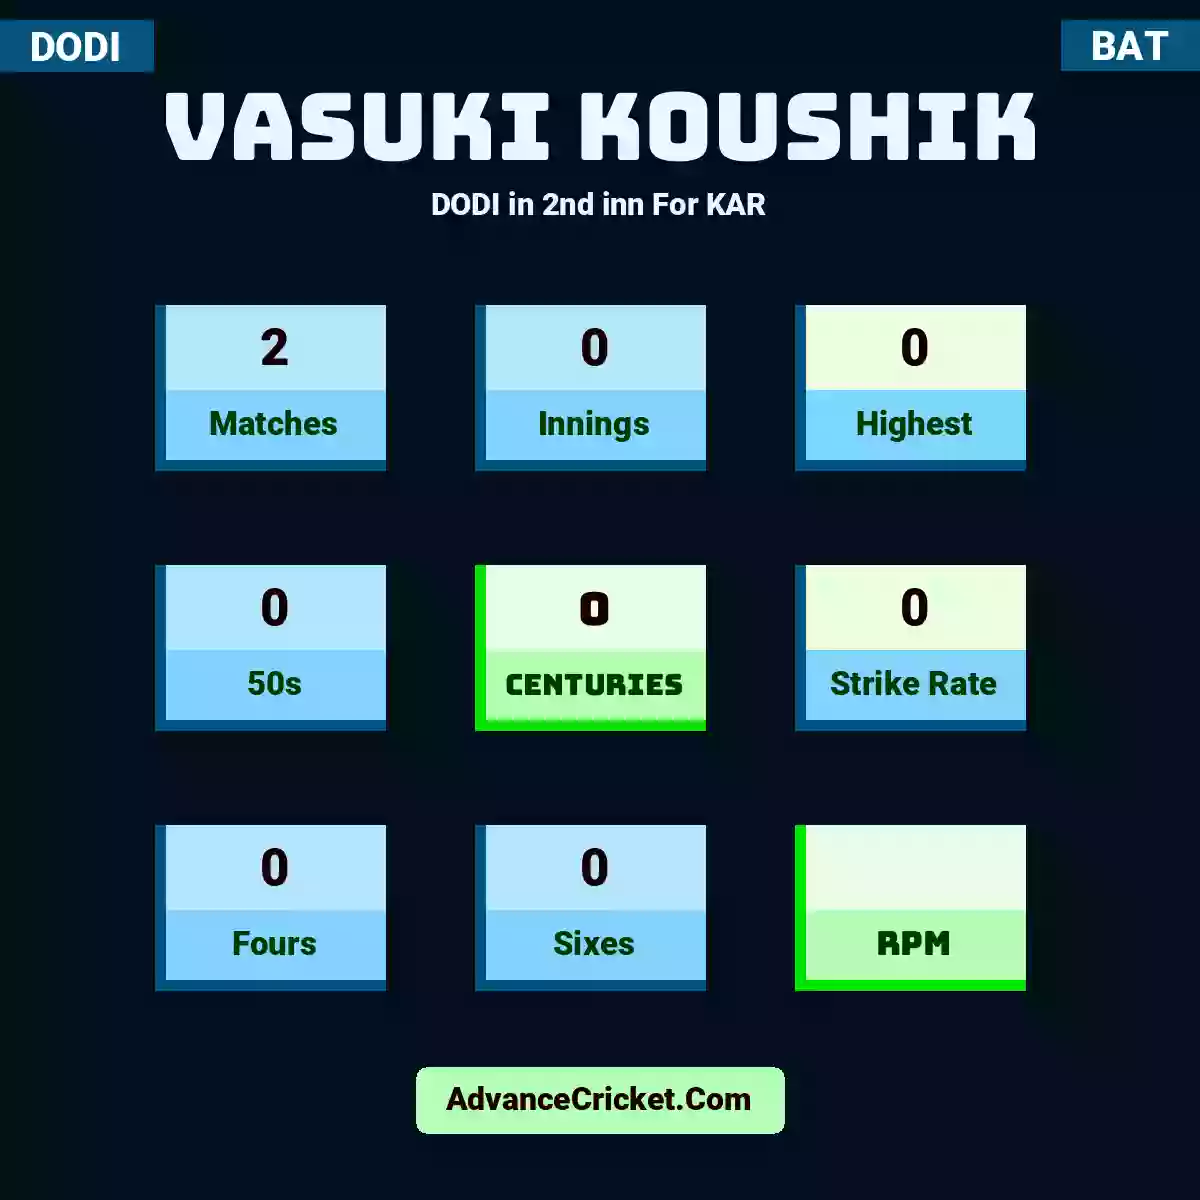 Vasuki Koushik DODI  in 2nd inn For KAR, Vasuki Koushik played 2 matches, scored 0 runs as highest, 0 half-centuries, and 0 centuries, with a strike rate of 0. V.Koushik hit 0 fours and 0 sixes.